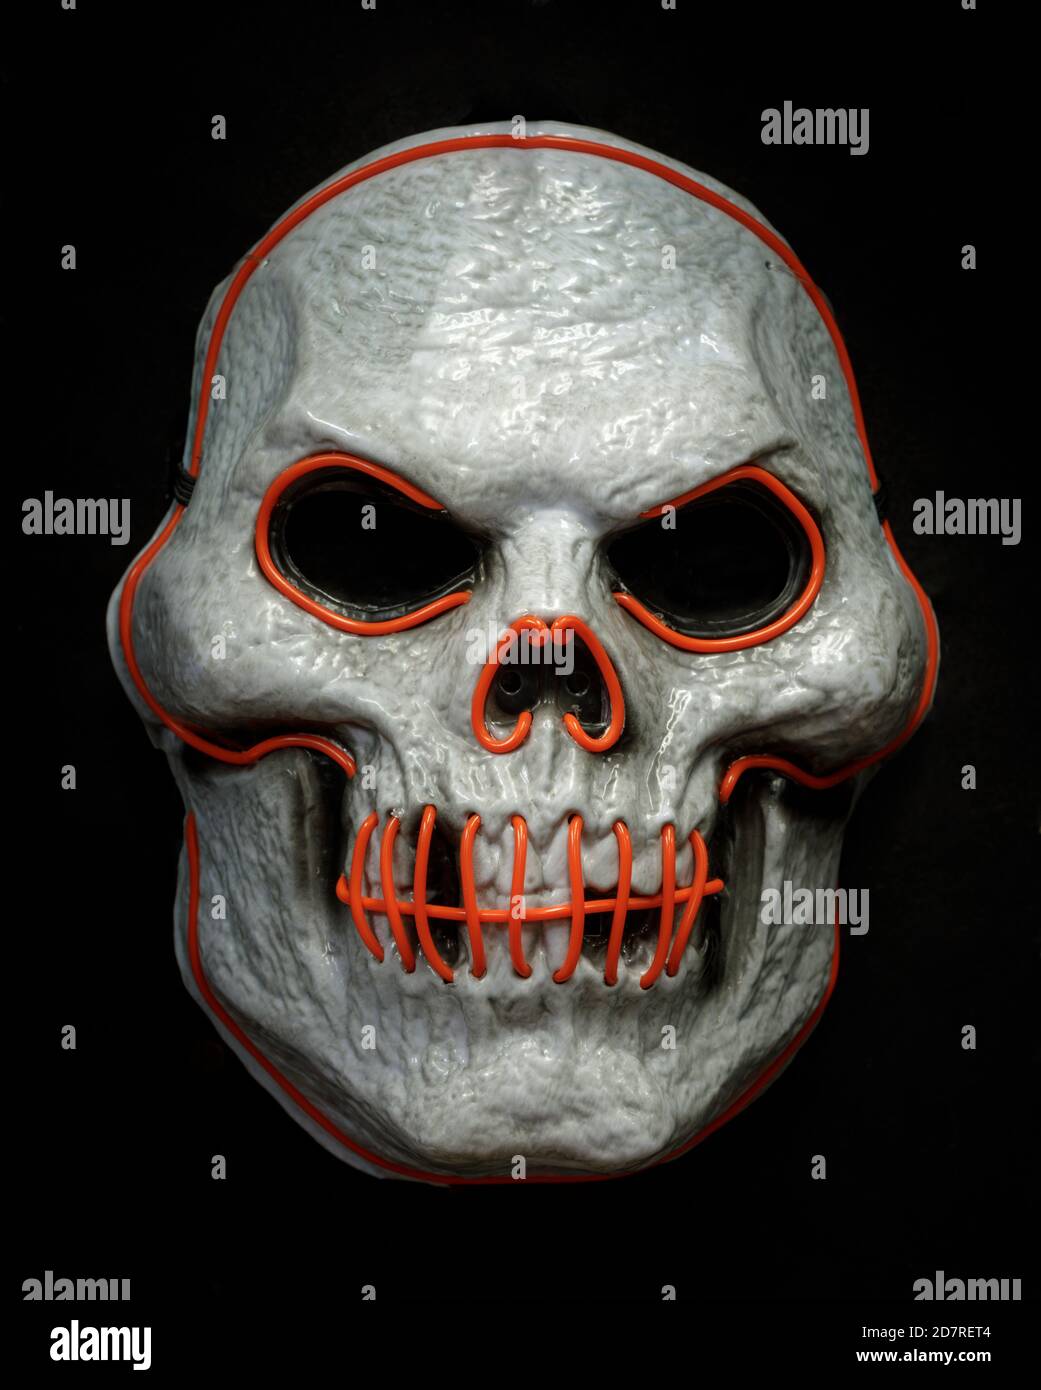 Doom El Wire Light Up Skeleton Face Mask Isolated Against Black Background Stock Photo